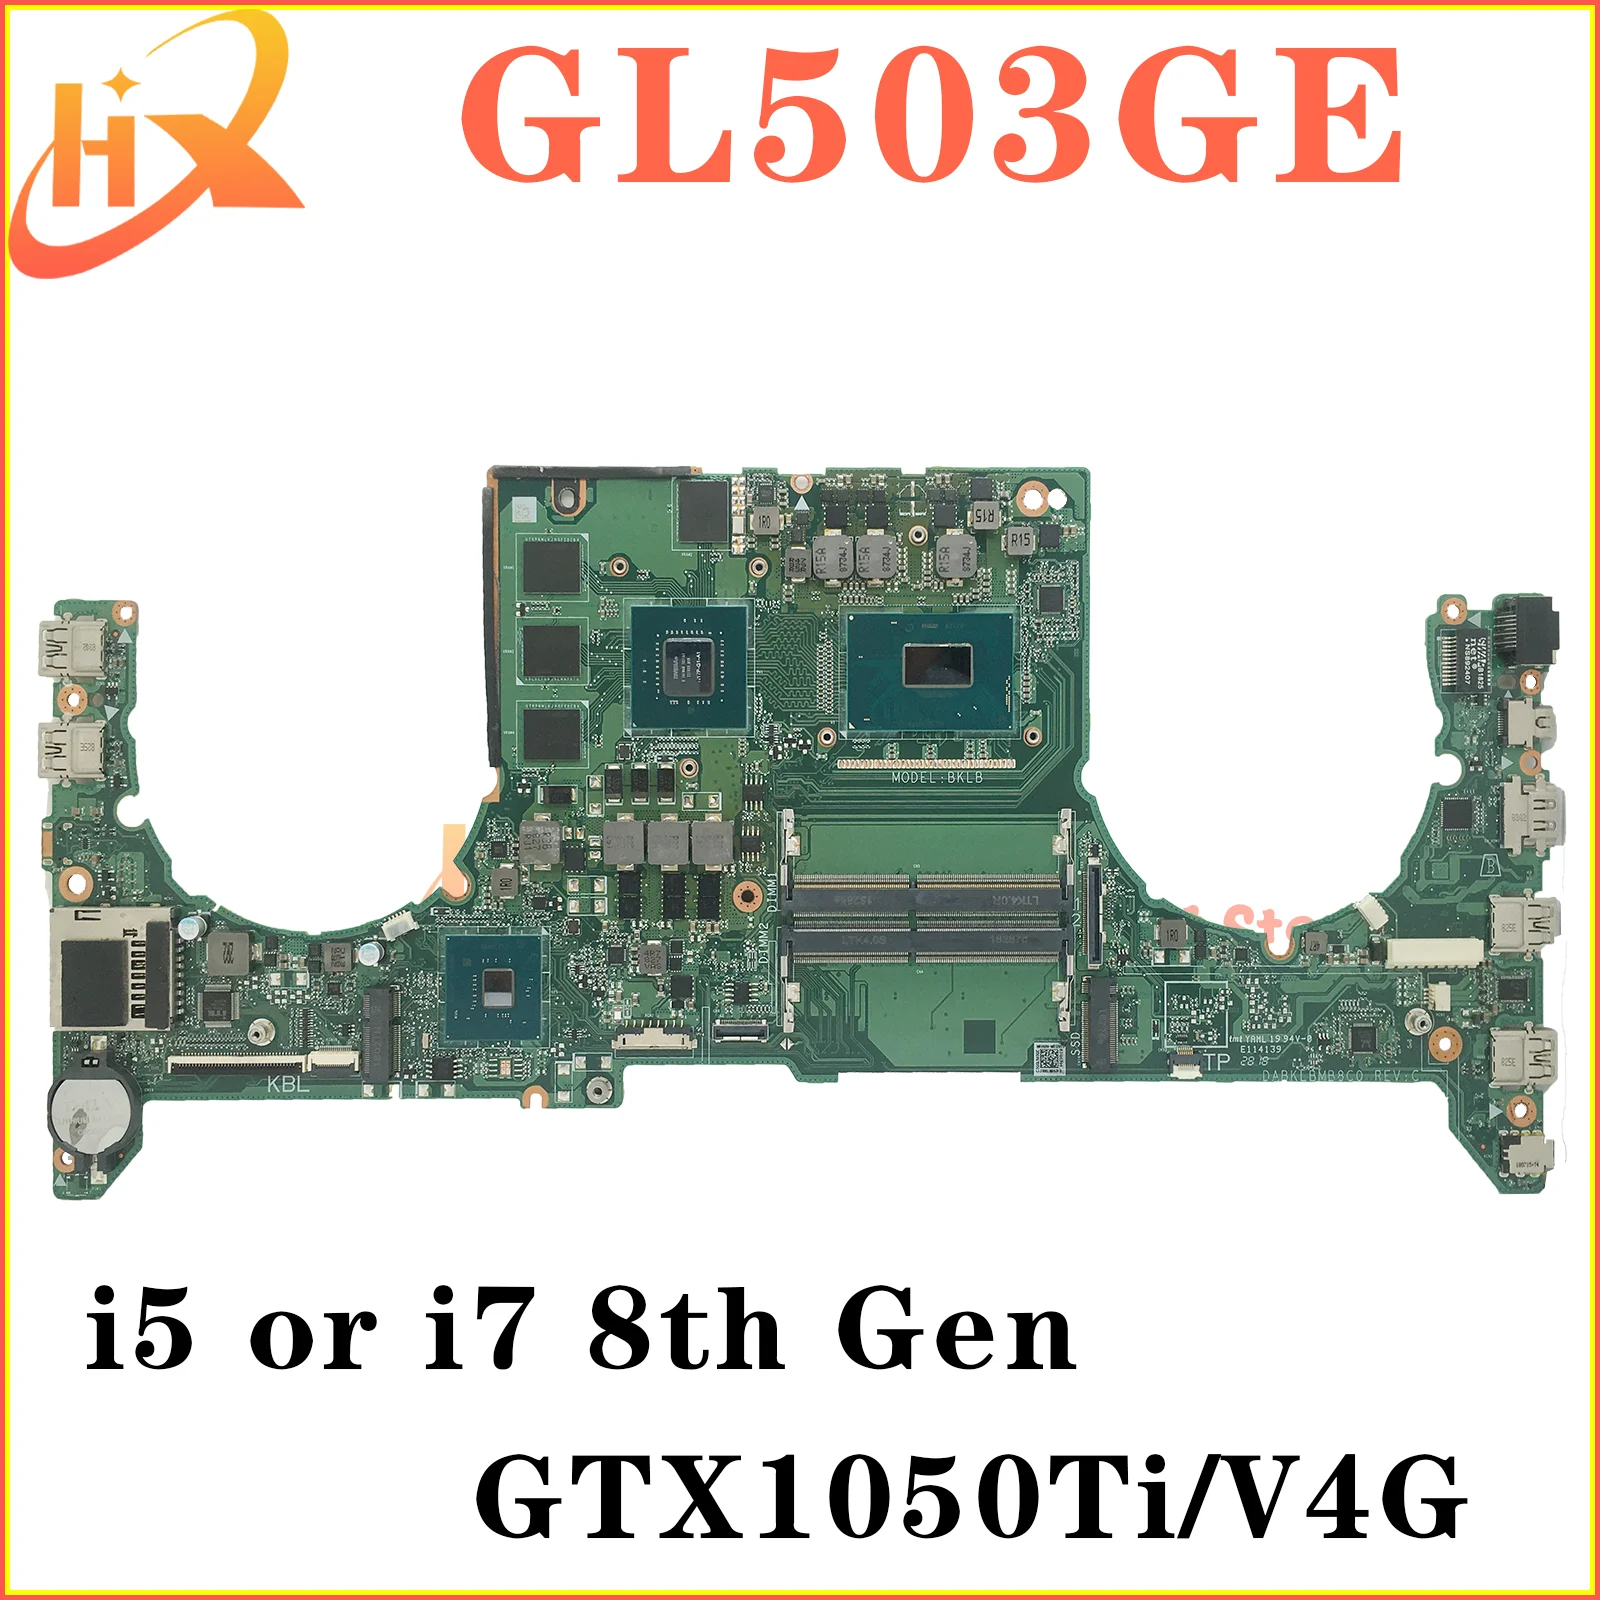 

DABKLBMB8C0 Mainboard For ASUS GL503GE GL503G MW503G PX503G Laptop Motherboard i5 i7 8th Gen GTX1050Ti/V4G 100% Test